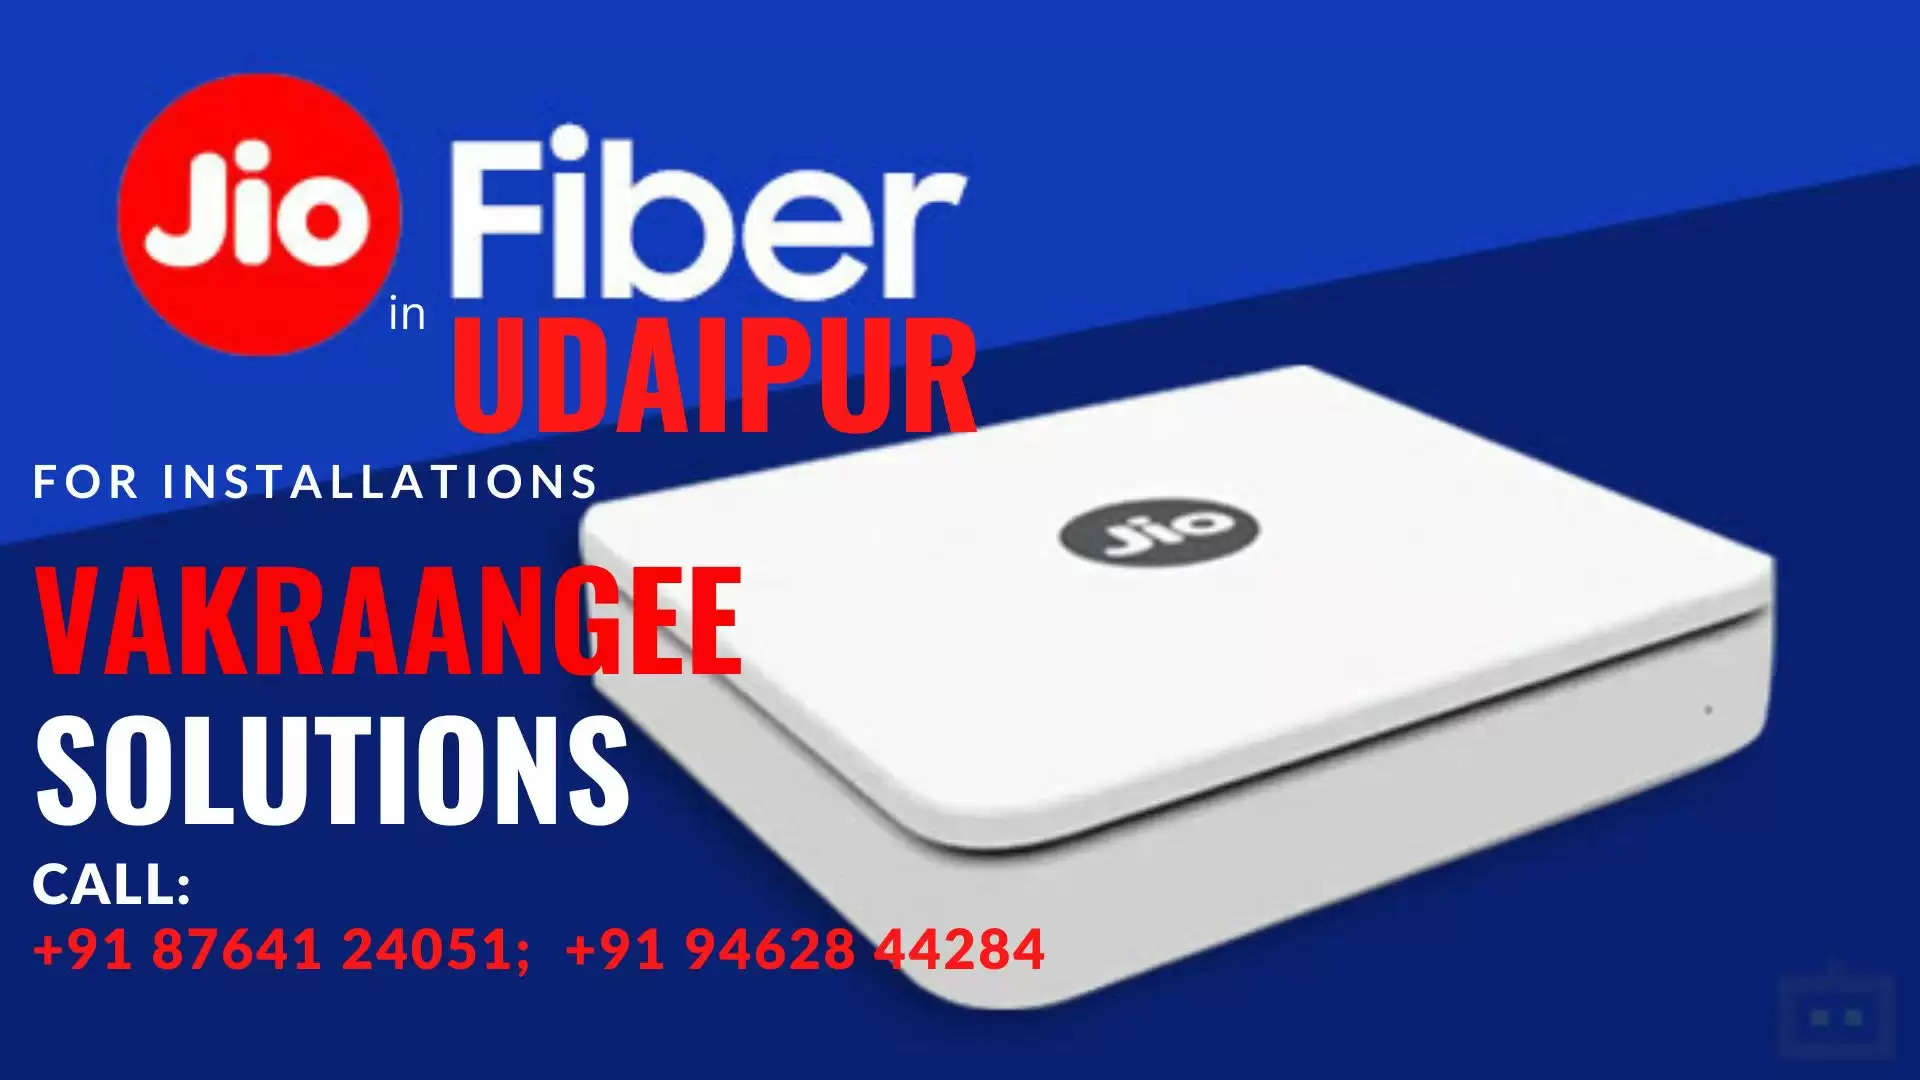 Jio Fiber in Udaipur, Jio Fiber installation in Udaipur, who does Jio Fiber Installation in Udaipur, Contact no for Jio Fiber Installation in Udaipur, Jio Fiber Plan in Udaipur